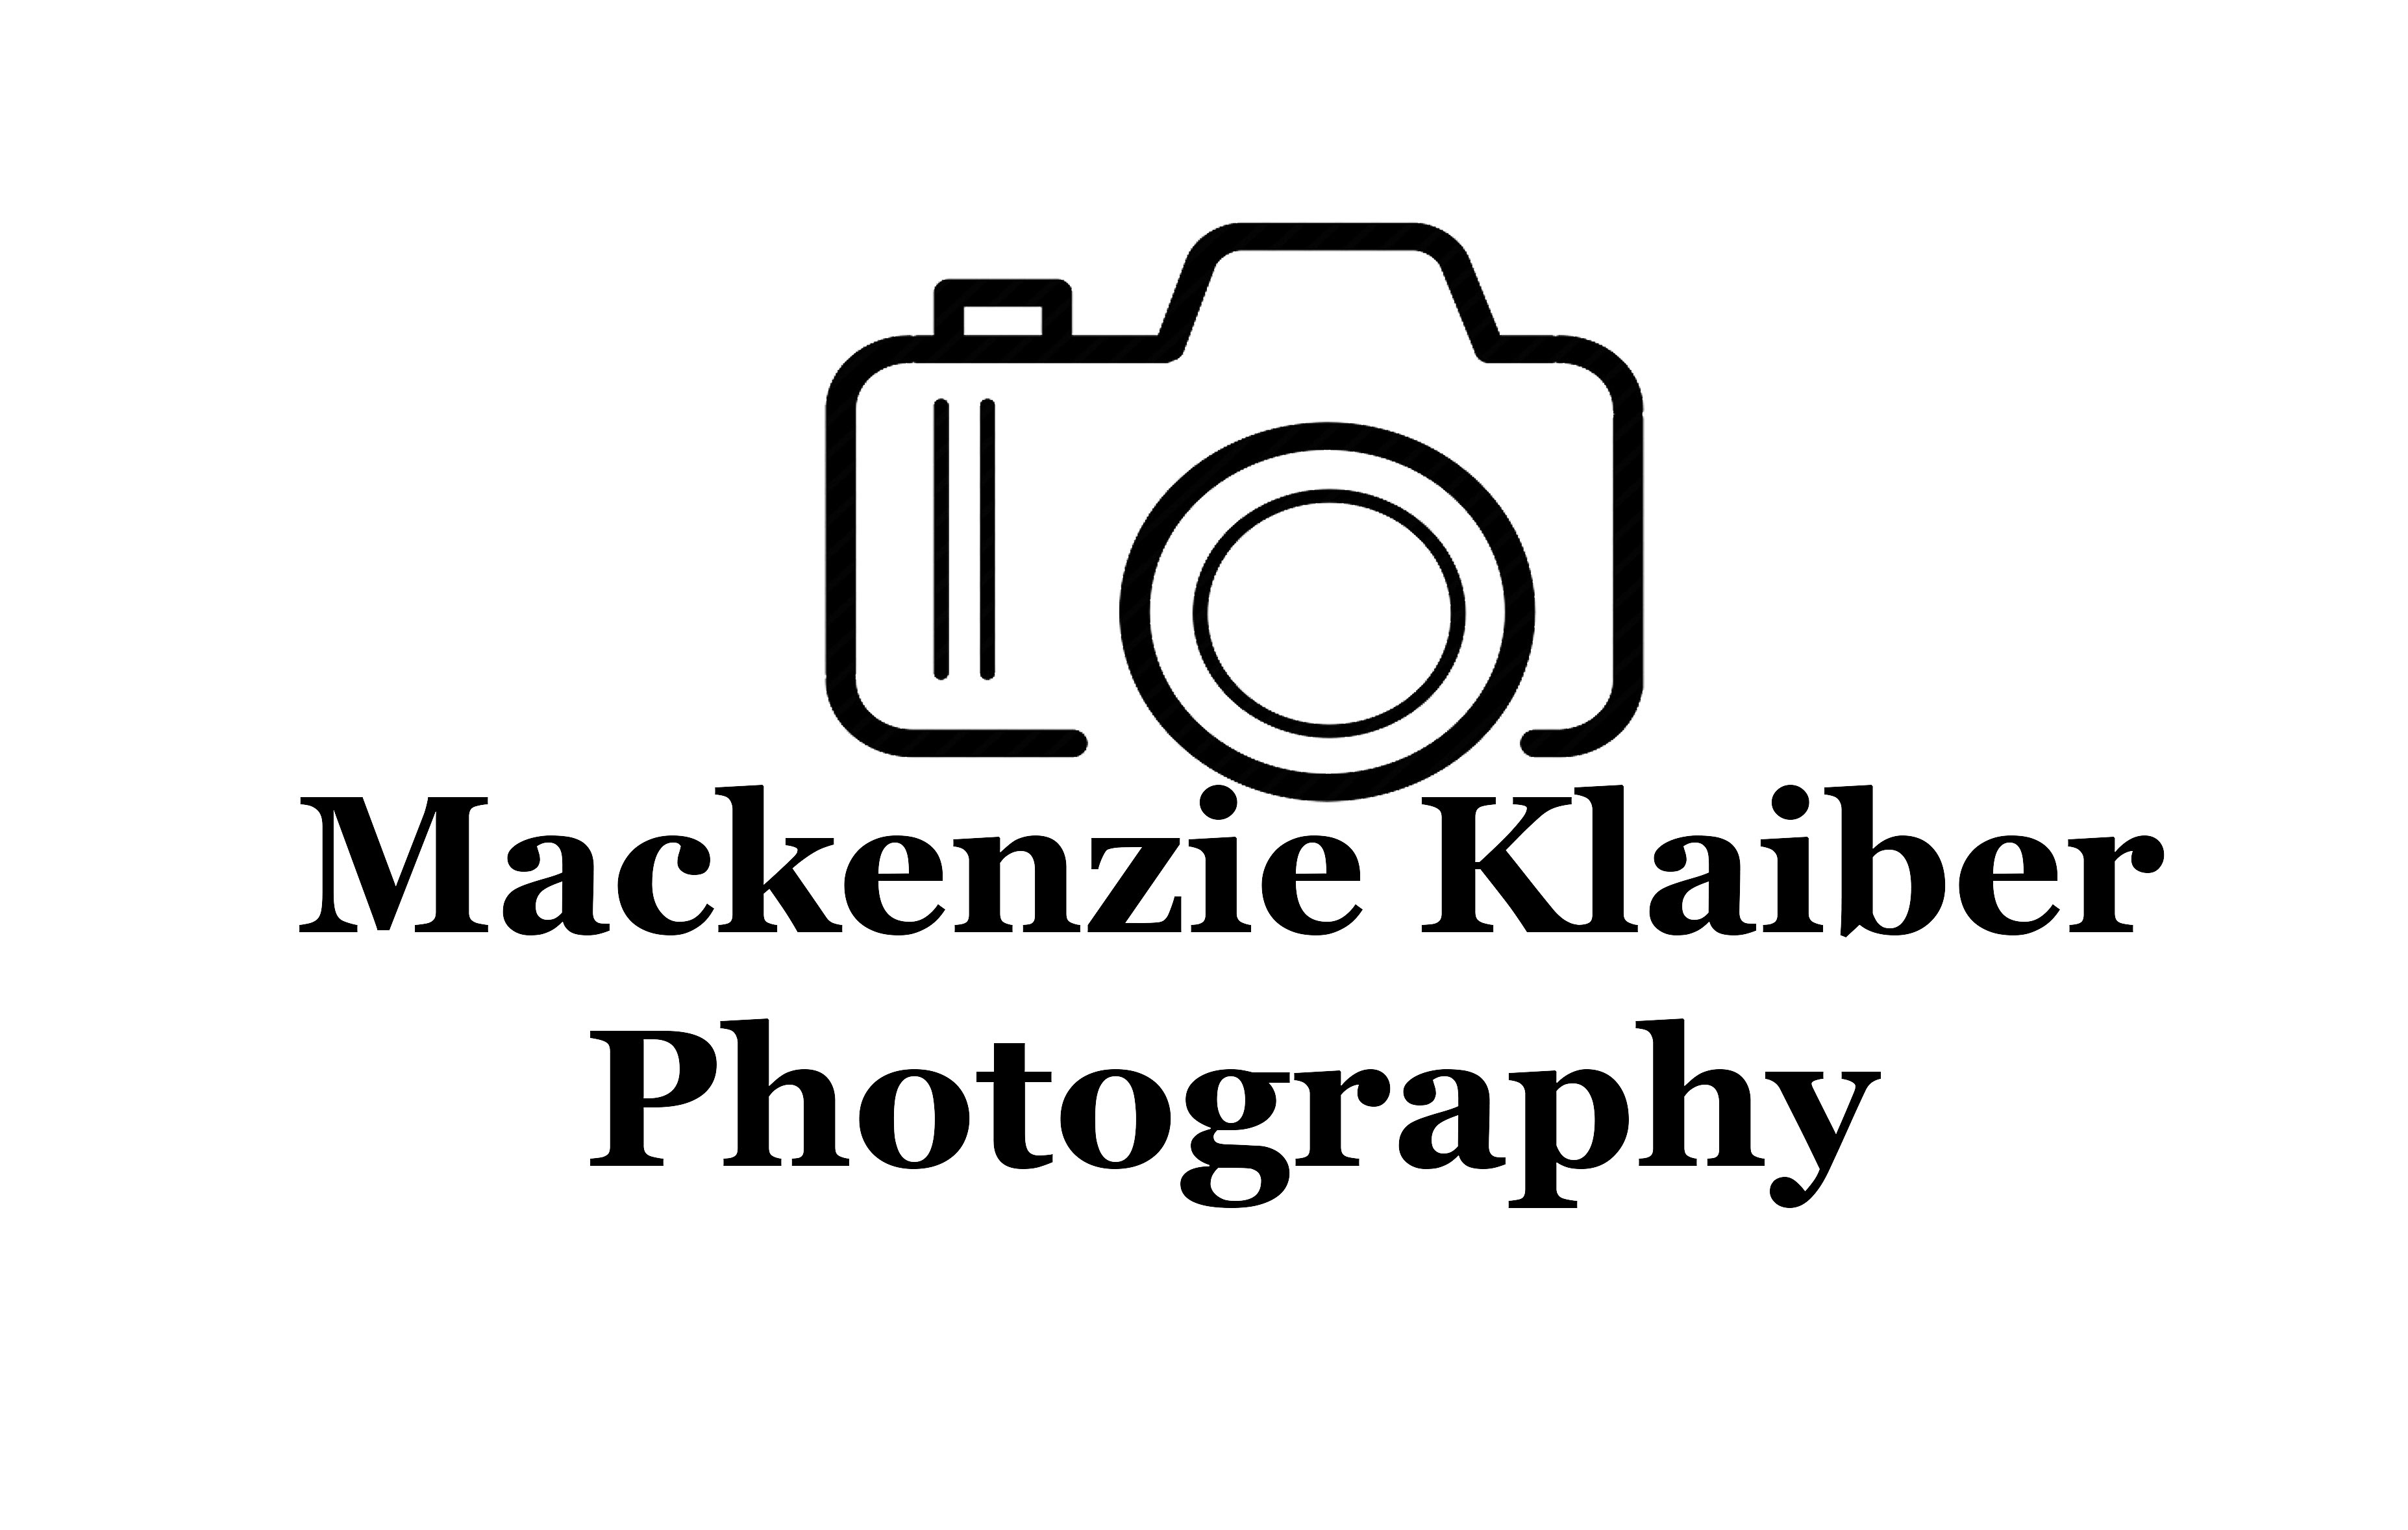 Mackenzie Klaiber